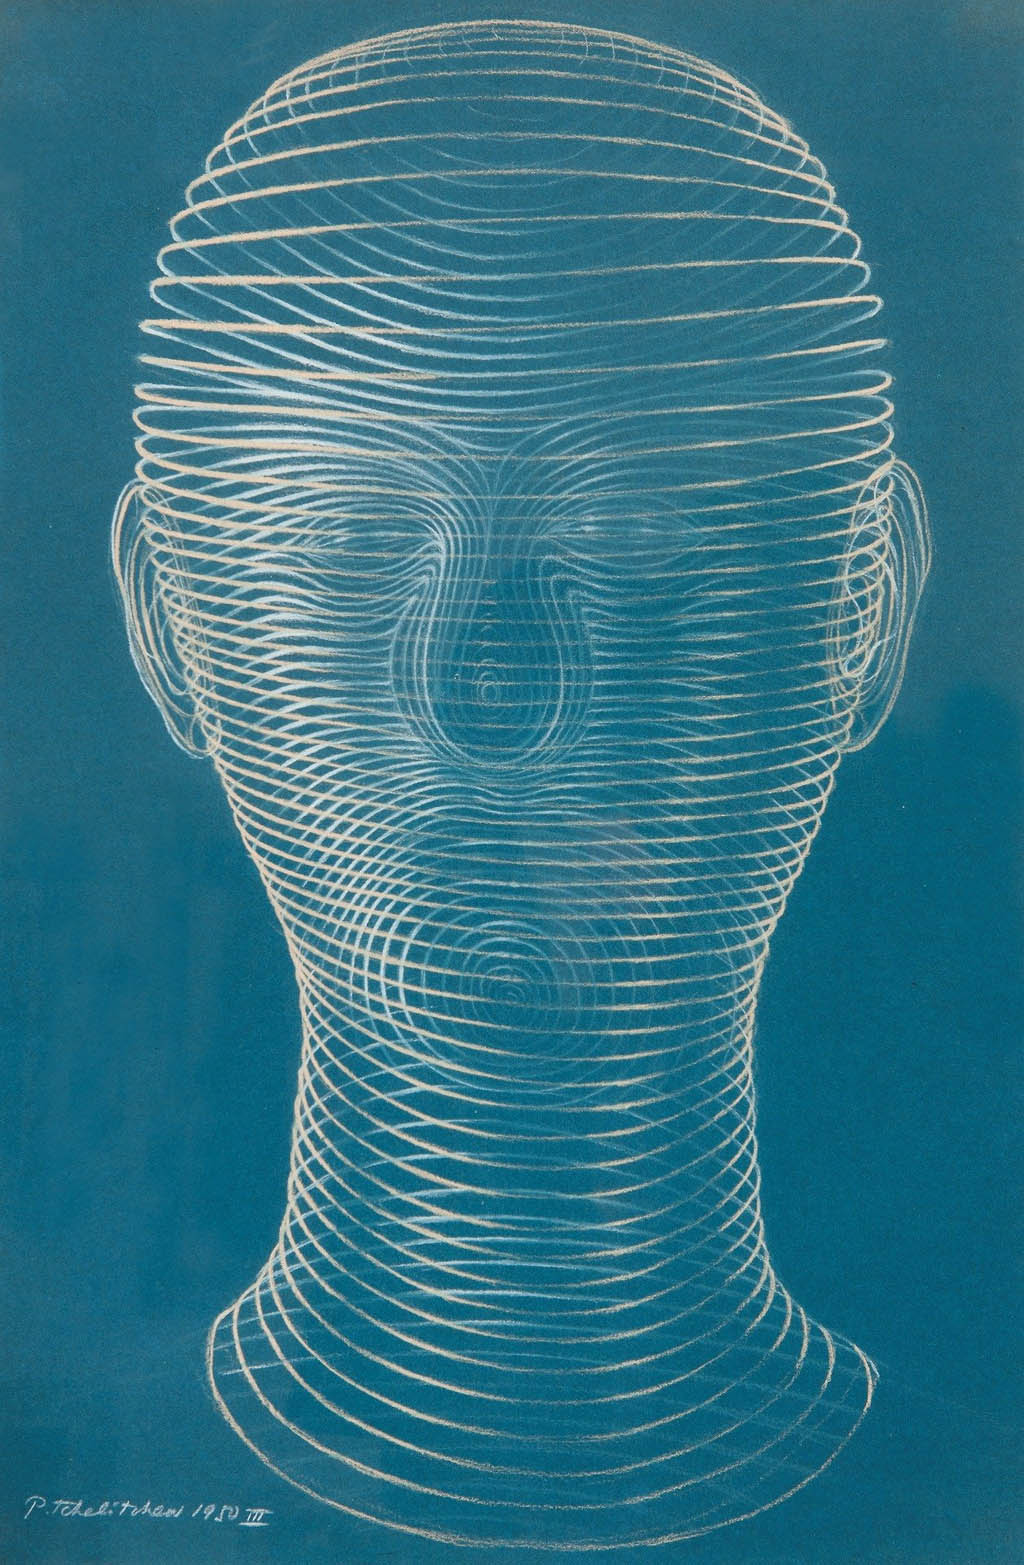 Pavel Tchelitchew - Spiral Head - 1950 pastel on blue paper